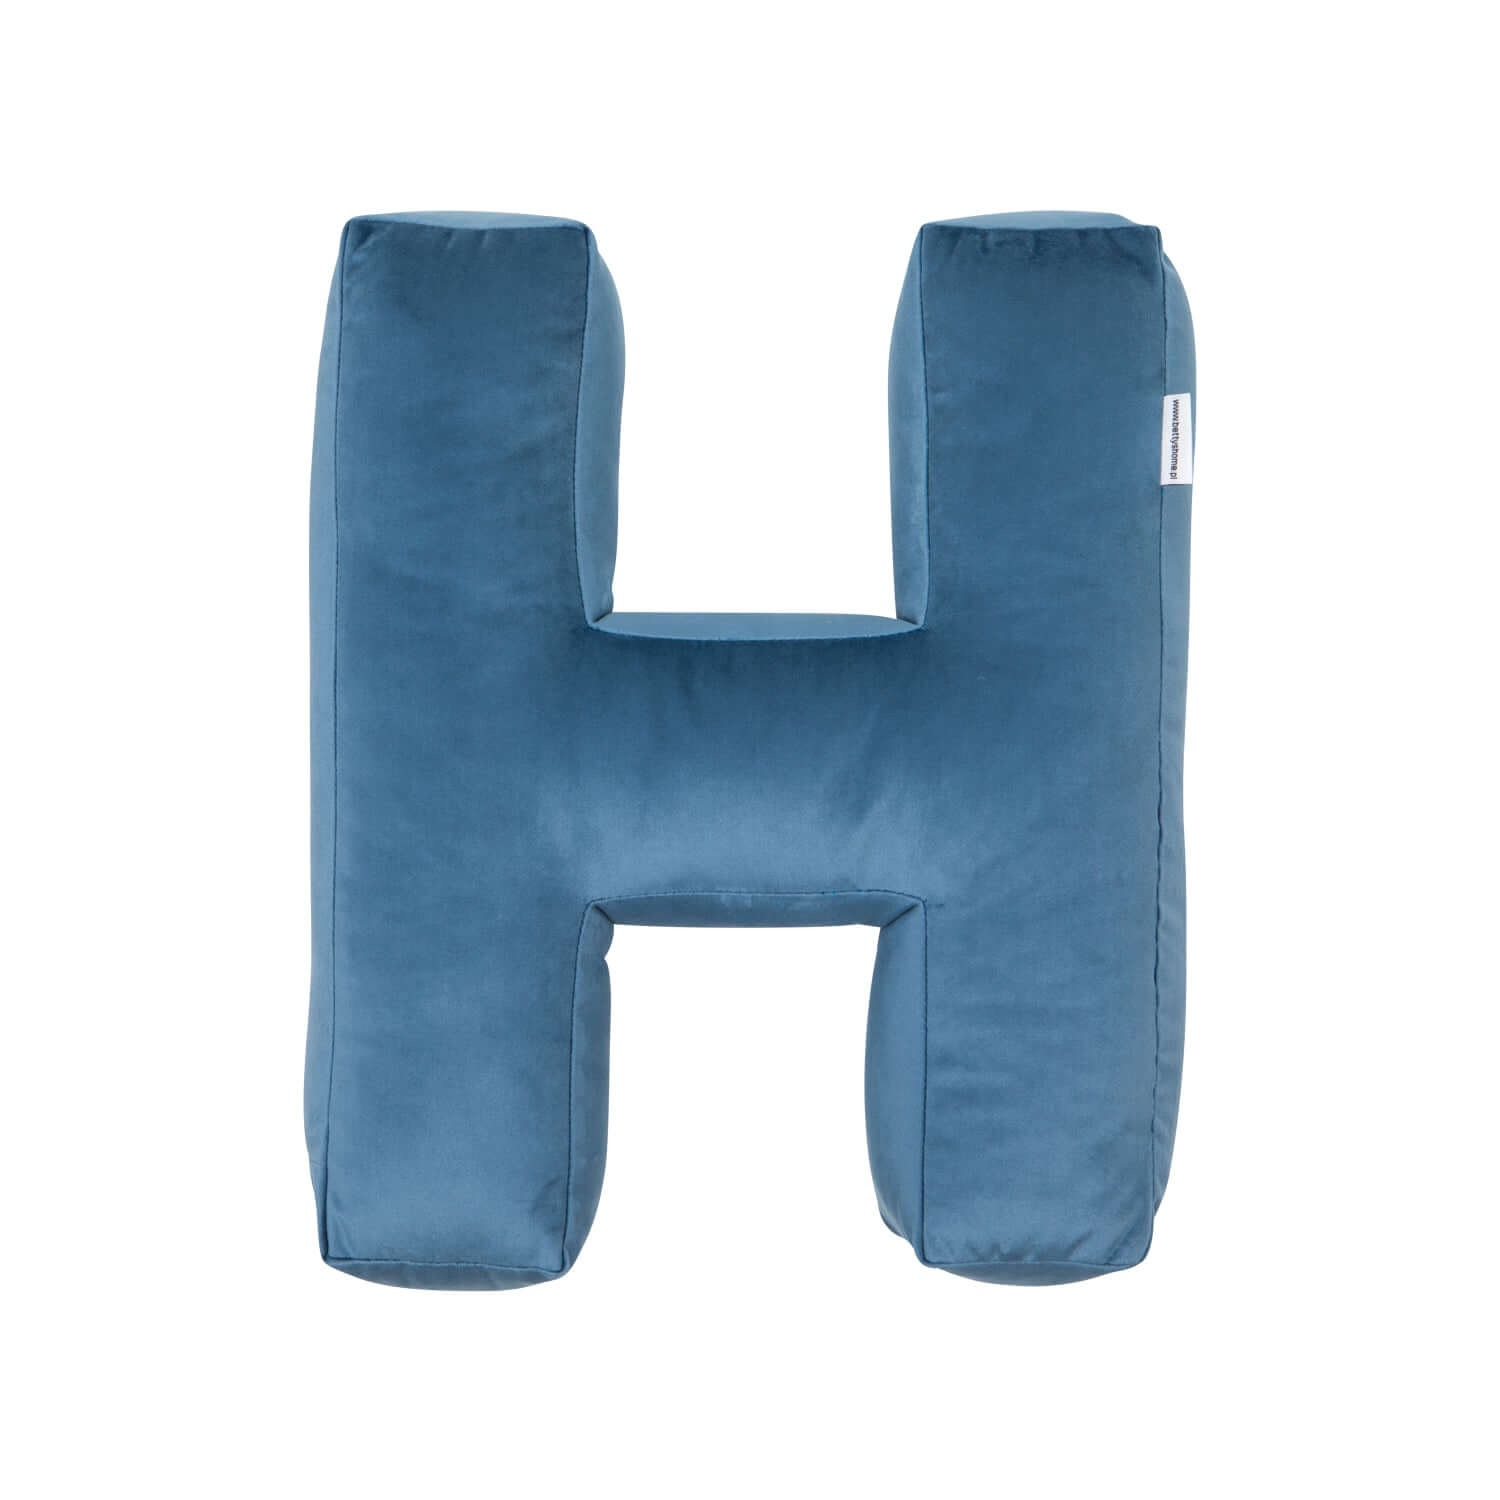 Poduszka literka welurowa H niebieska od Bettys Home